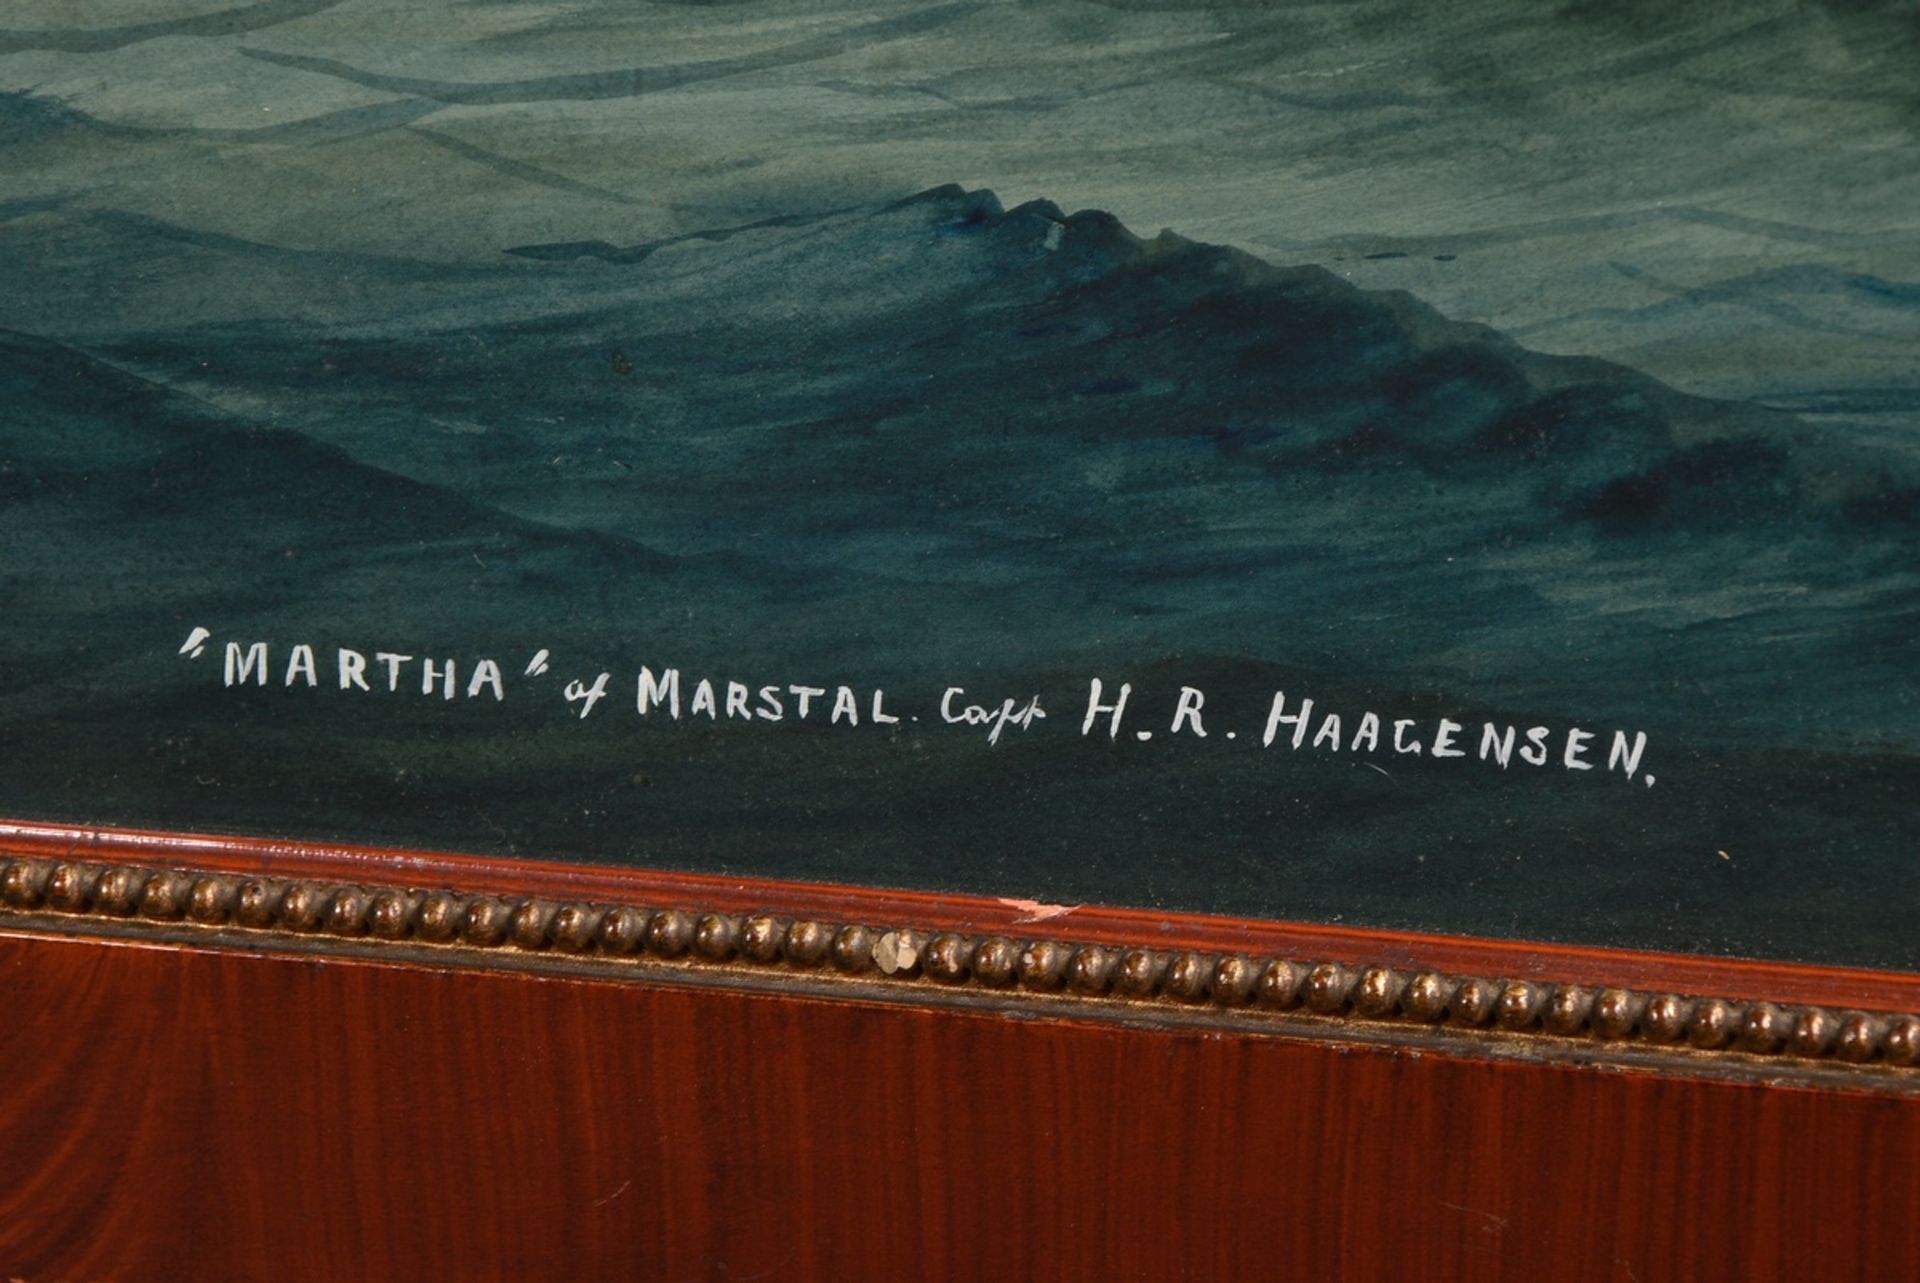 Captain's portrait or portrait of a ship "'Martha' of Marstal, Capt. H.R. Haagensen" (built 1899), - Image 3 of 4